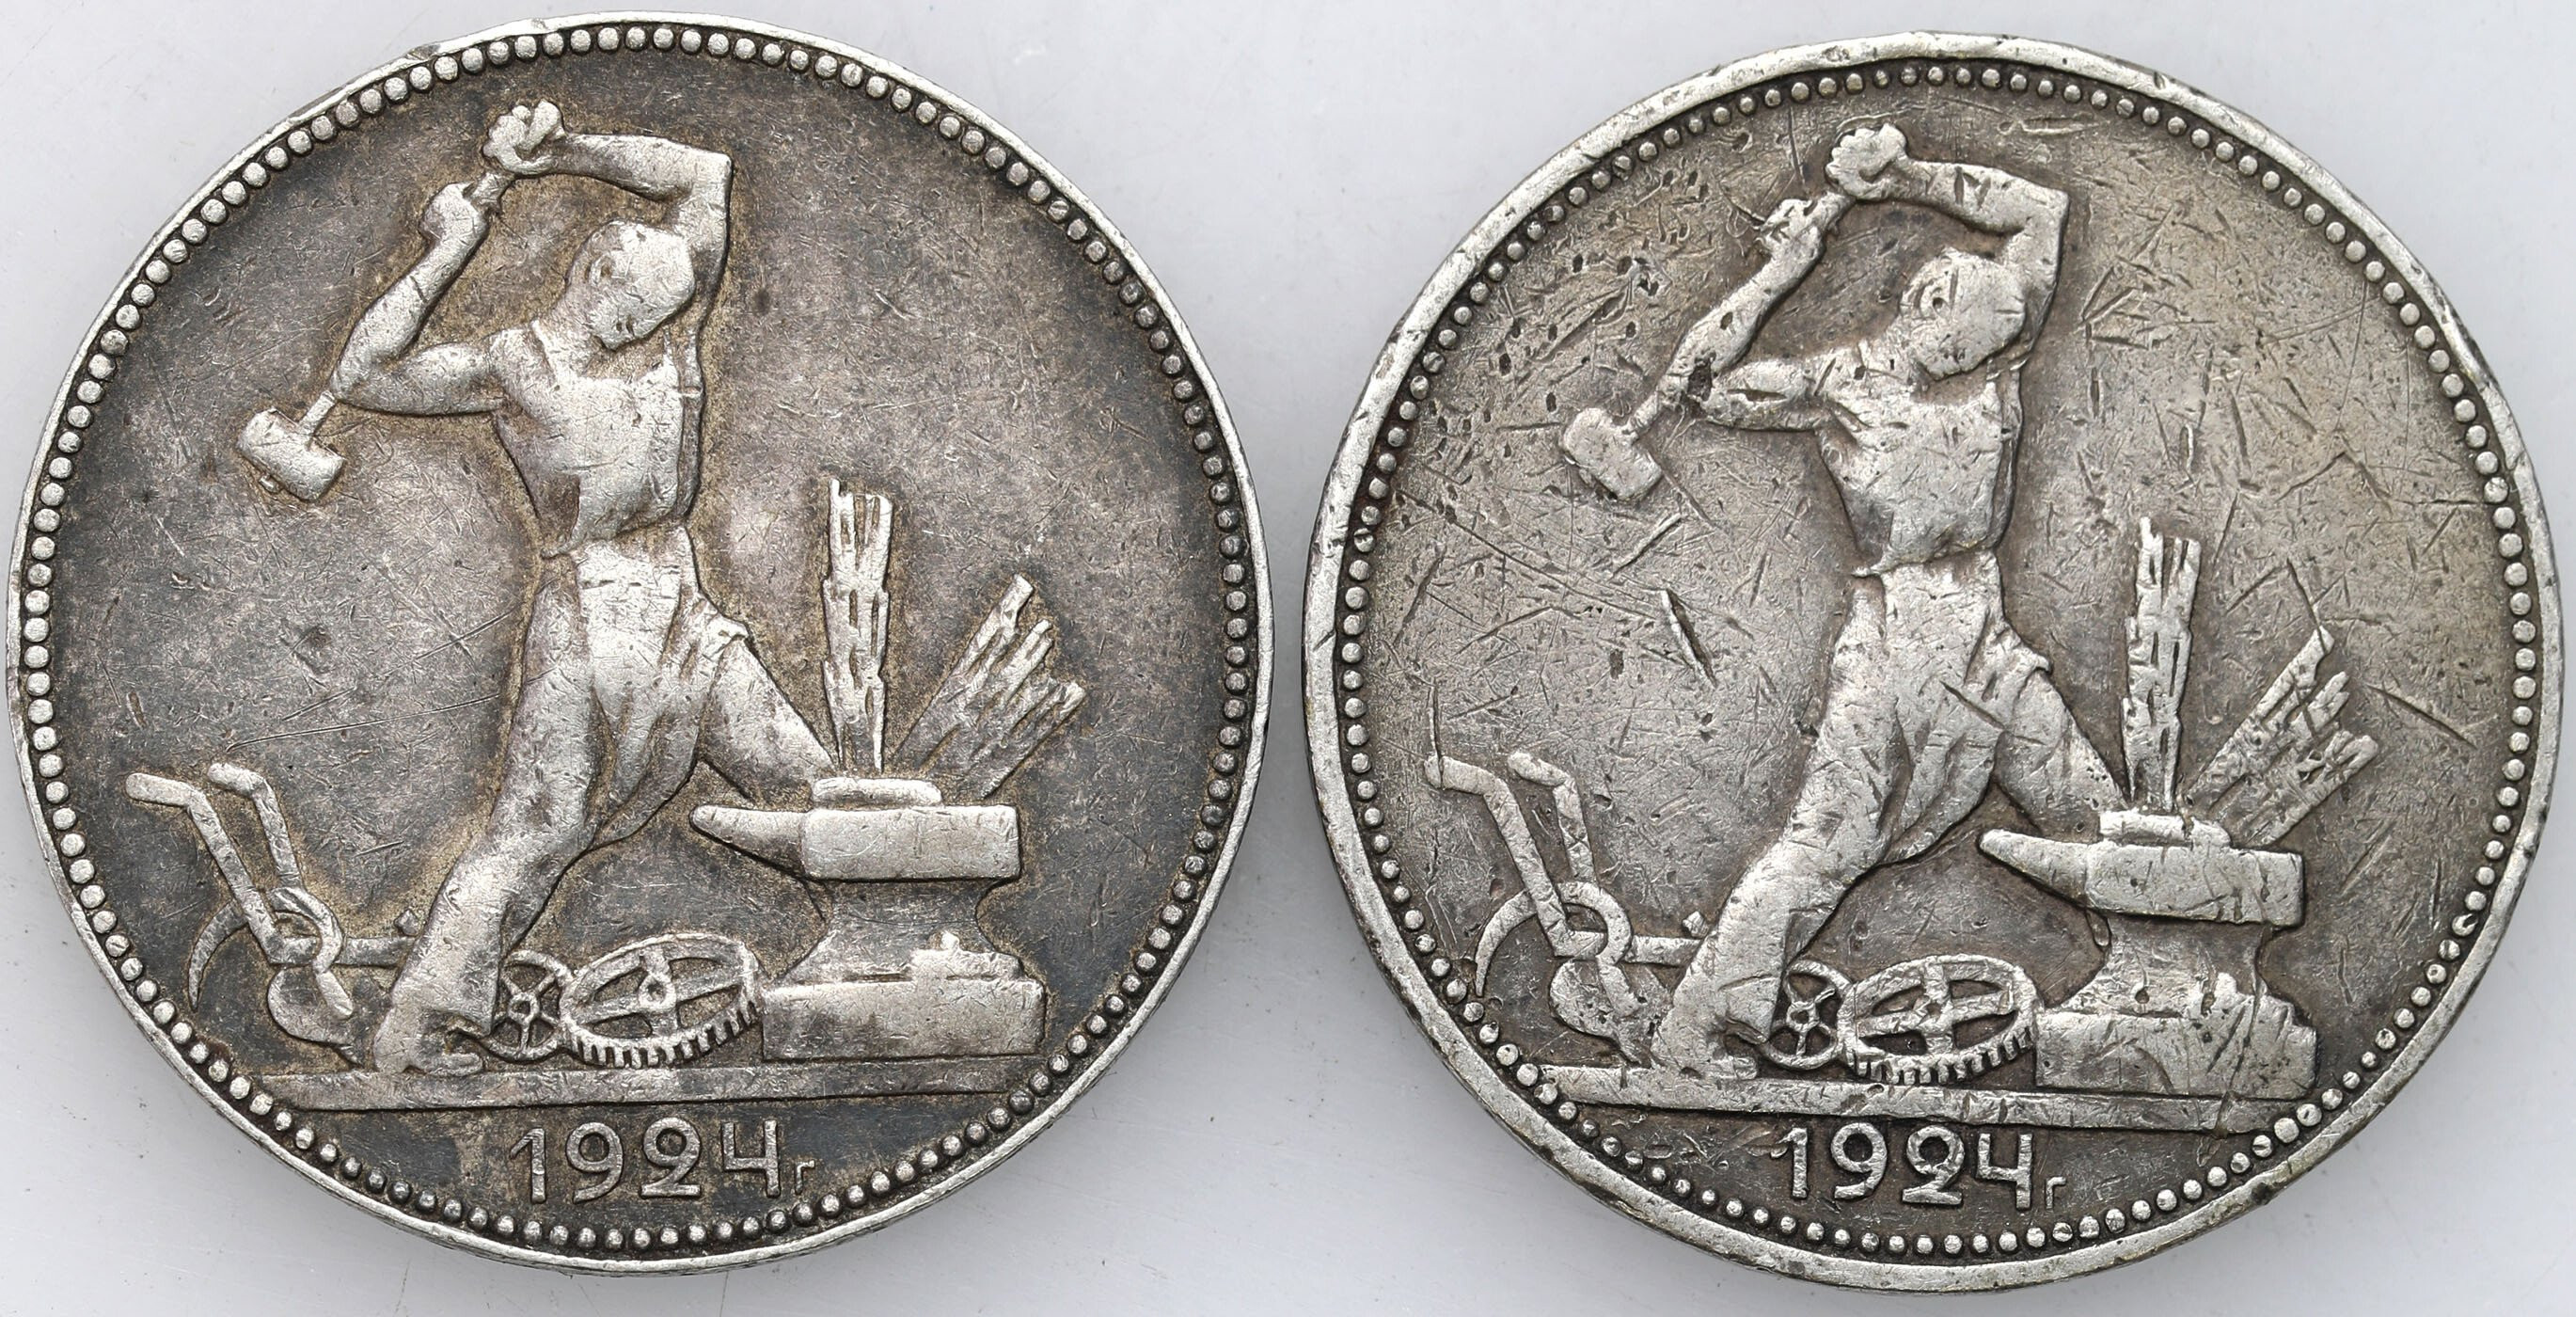 Rosja. Połtinnik 1924 ПЛ, Petersburg, zestaw 2 monet